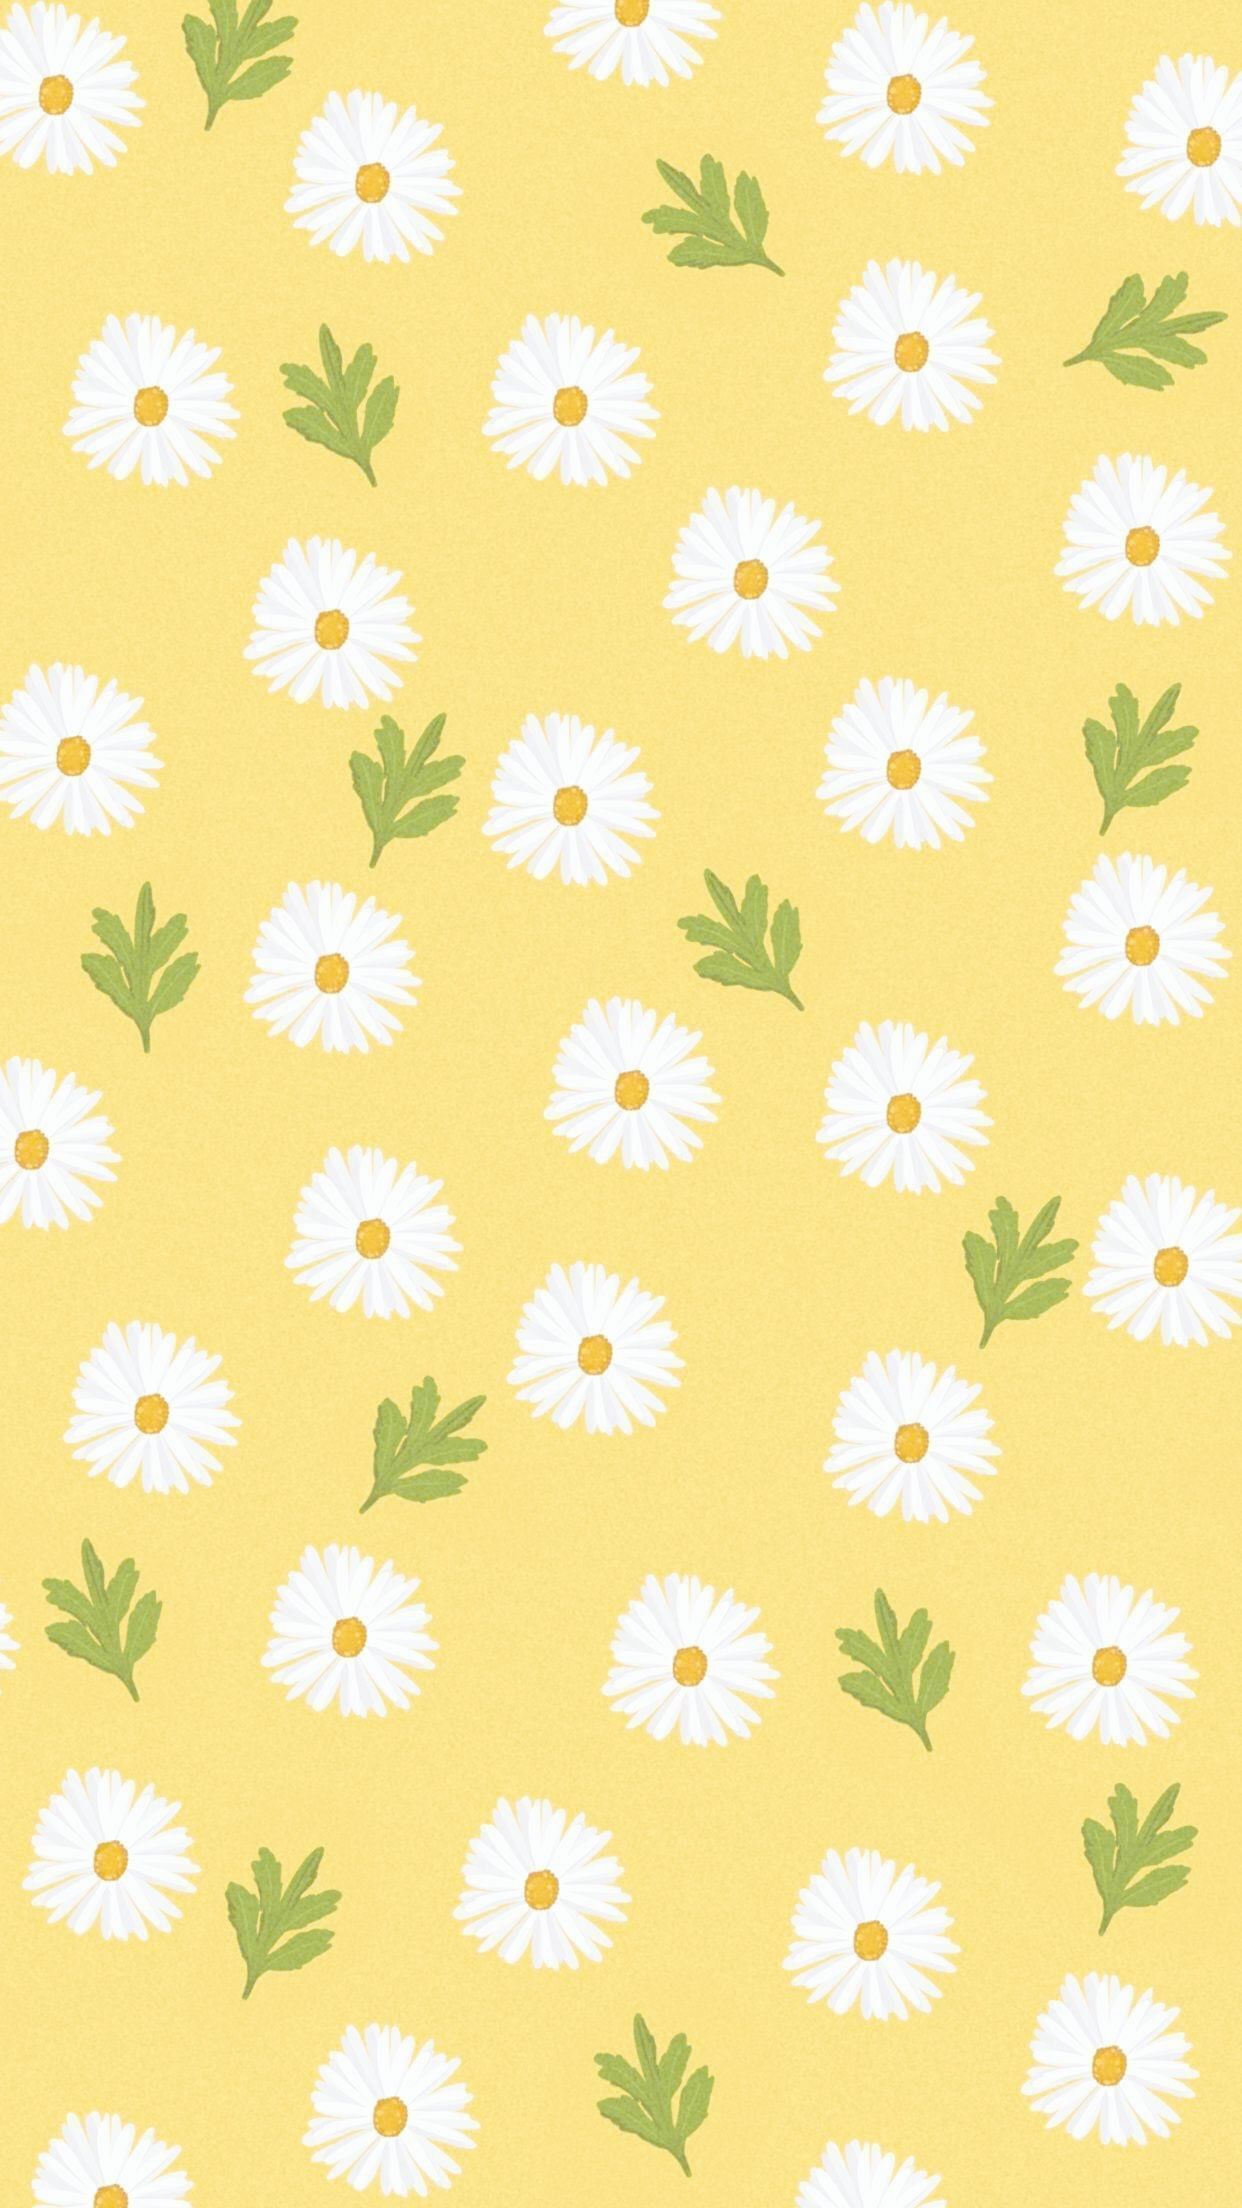 Daisies wallpaper iPhone#daisies #iphone #wallpaper#daisies #iphone #iphonedaisi.#daisies #iphone #i. Daisy wallpaper, Yellow wallpaper, Cute patterns wallpaper